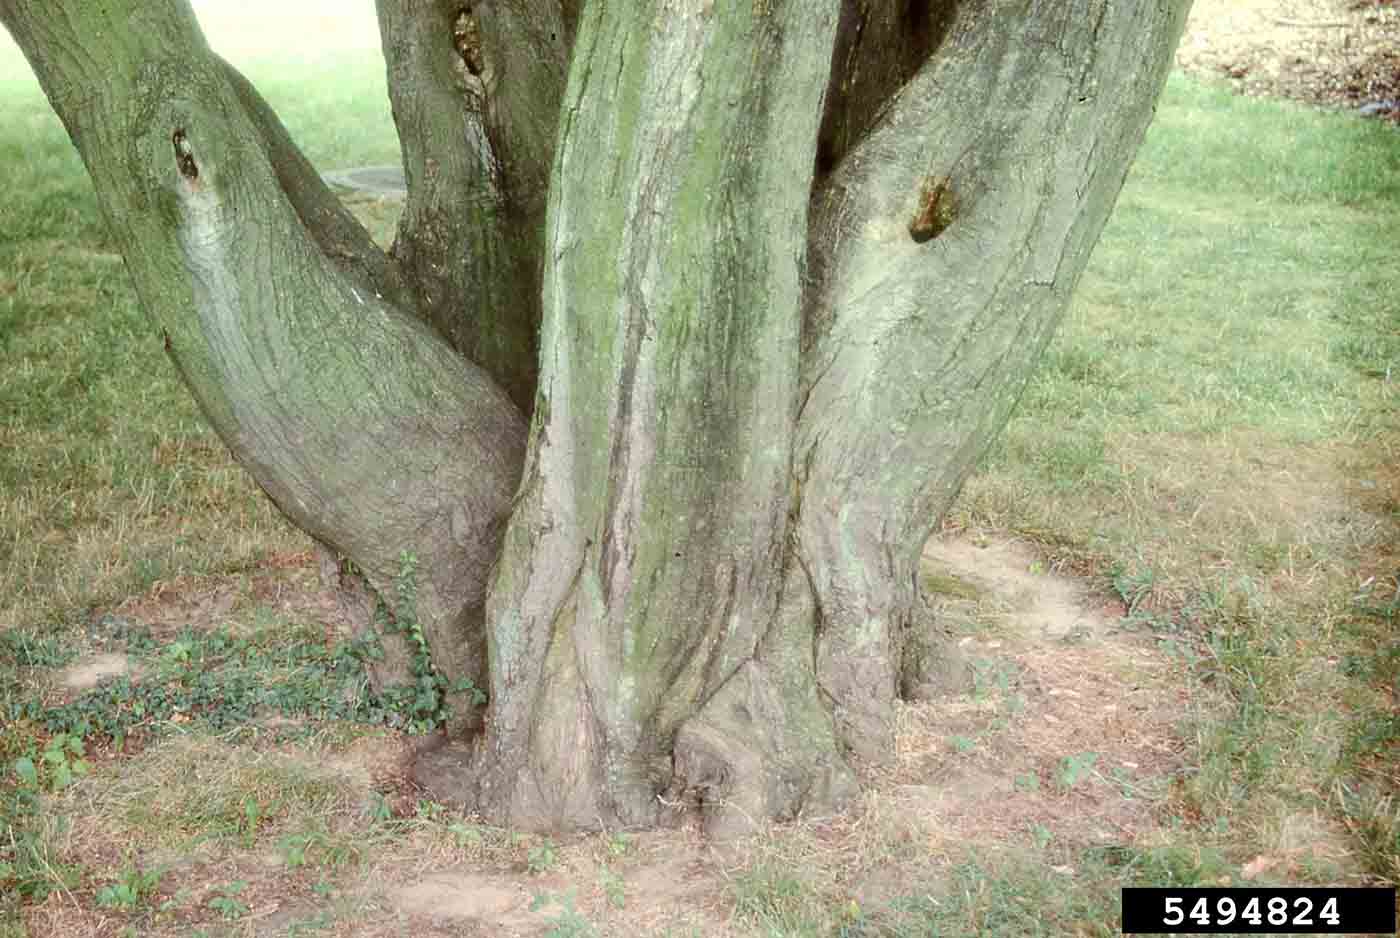 Japanese maple bark